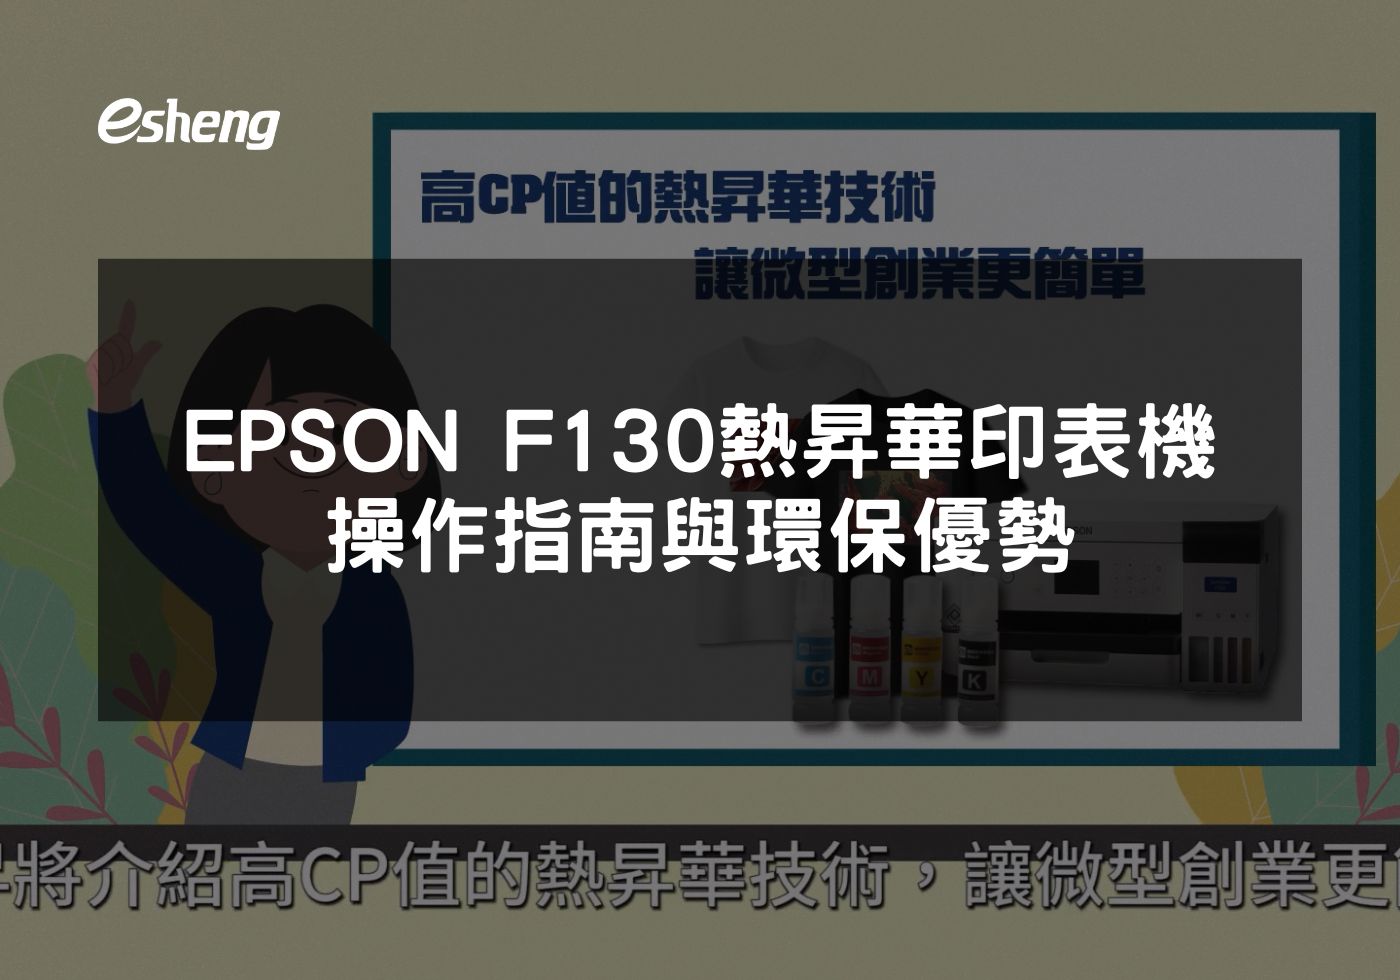 EPSON F130專業級熱昇華印表機特點全面解析